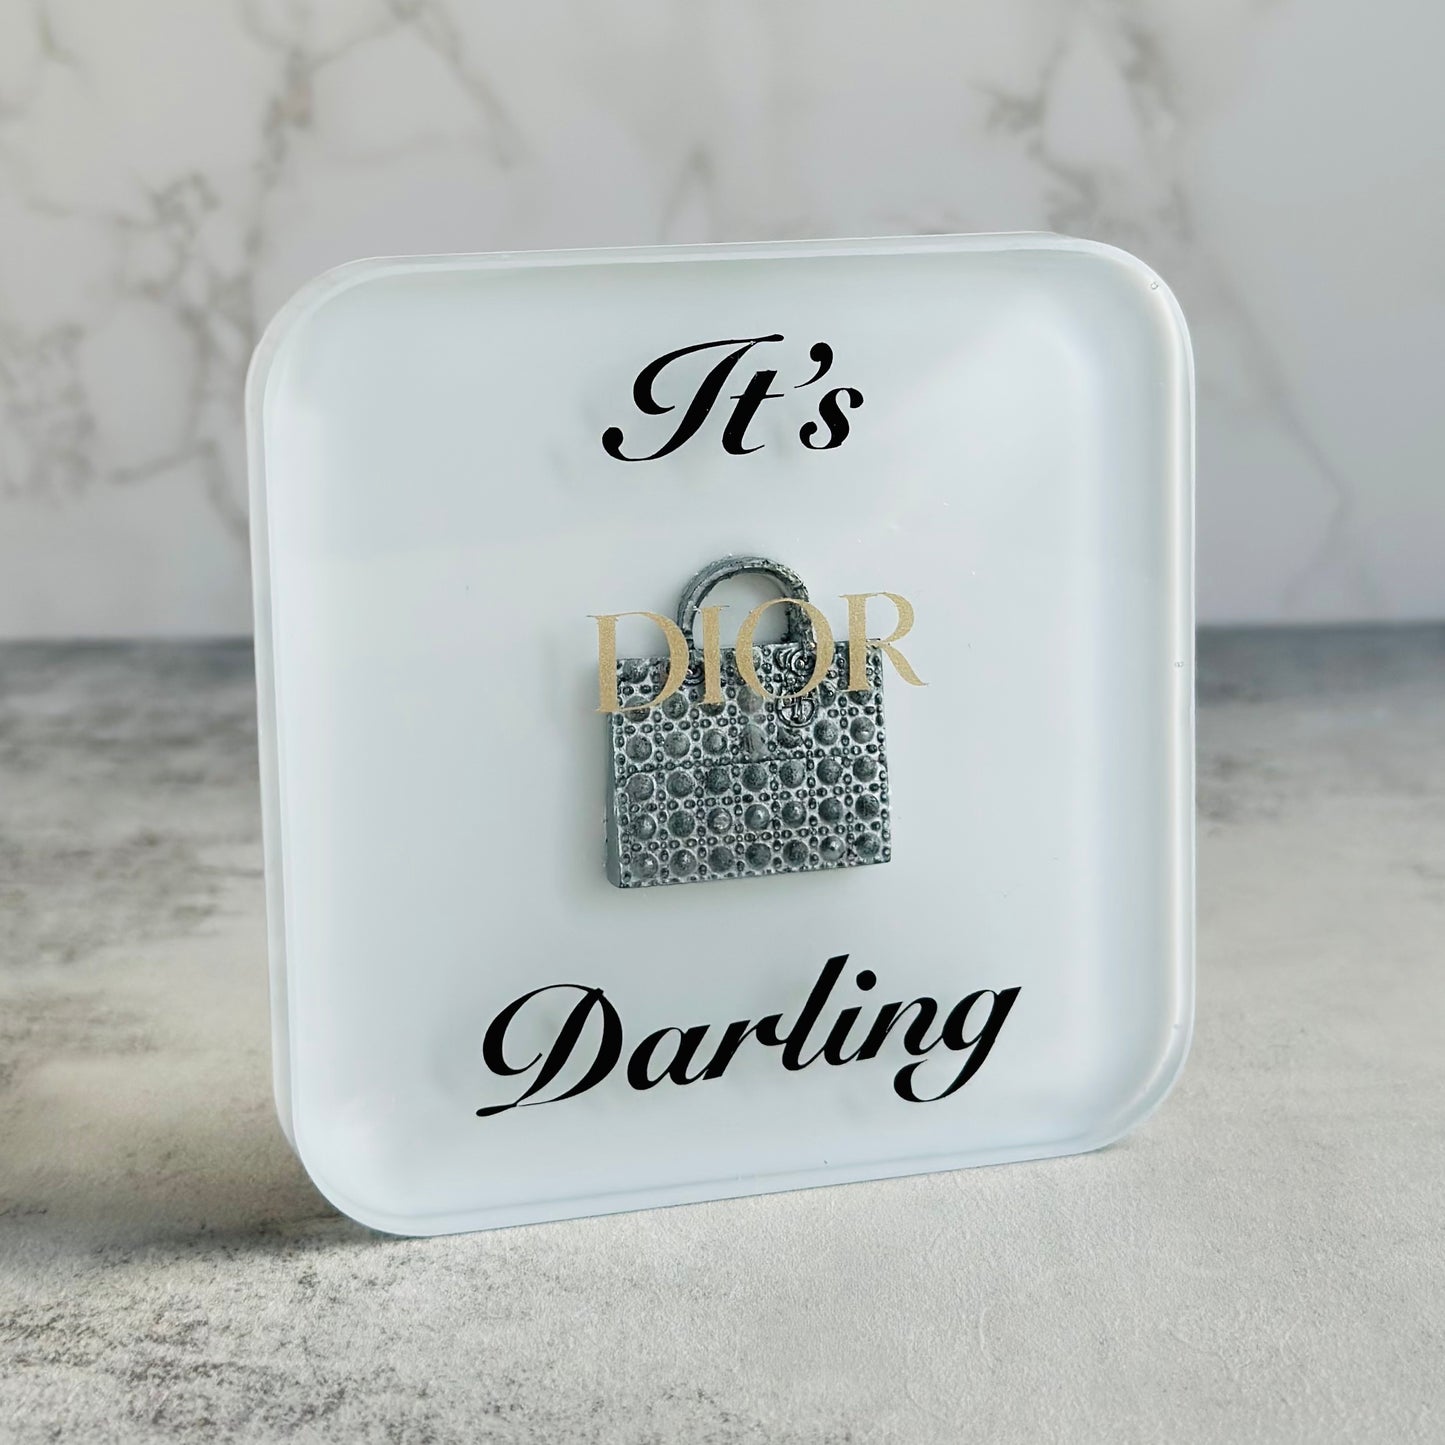 It’s Lady D Darling Coaster